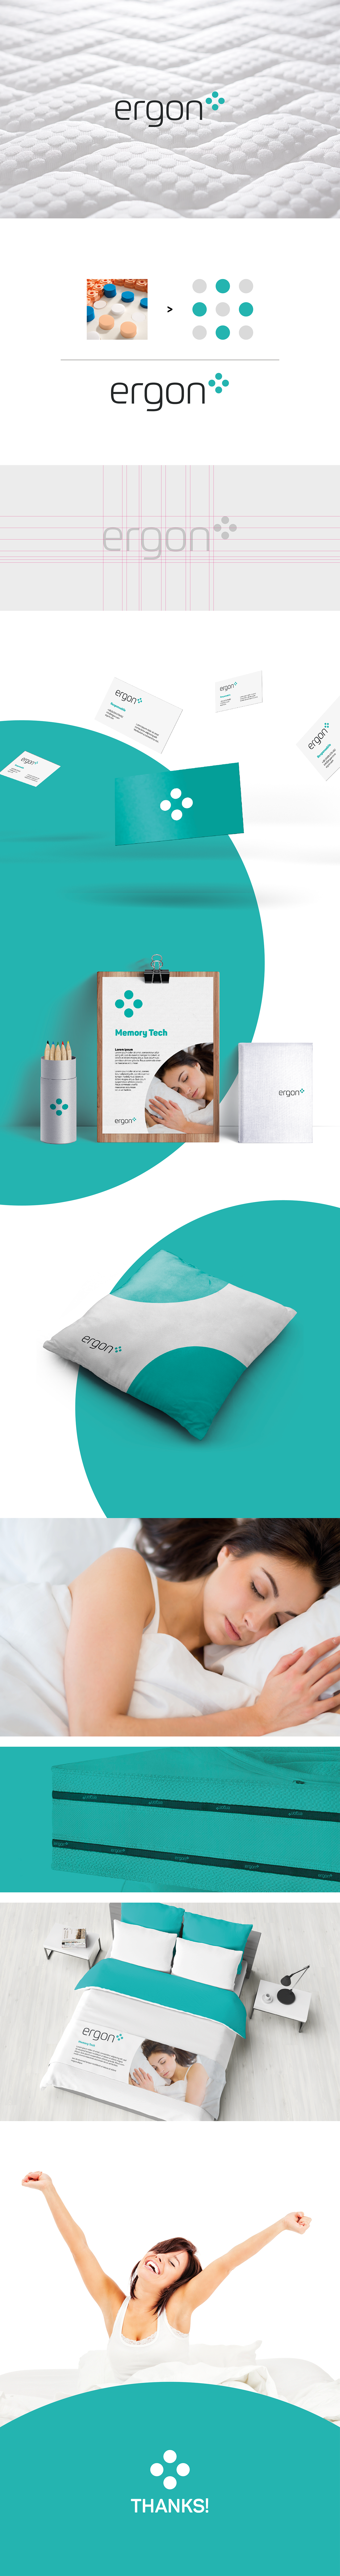 confort brand logo ispire branding  bed plus creative matress minimal